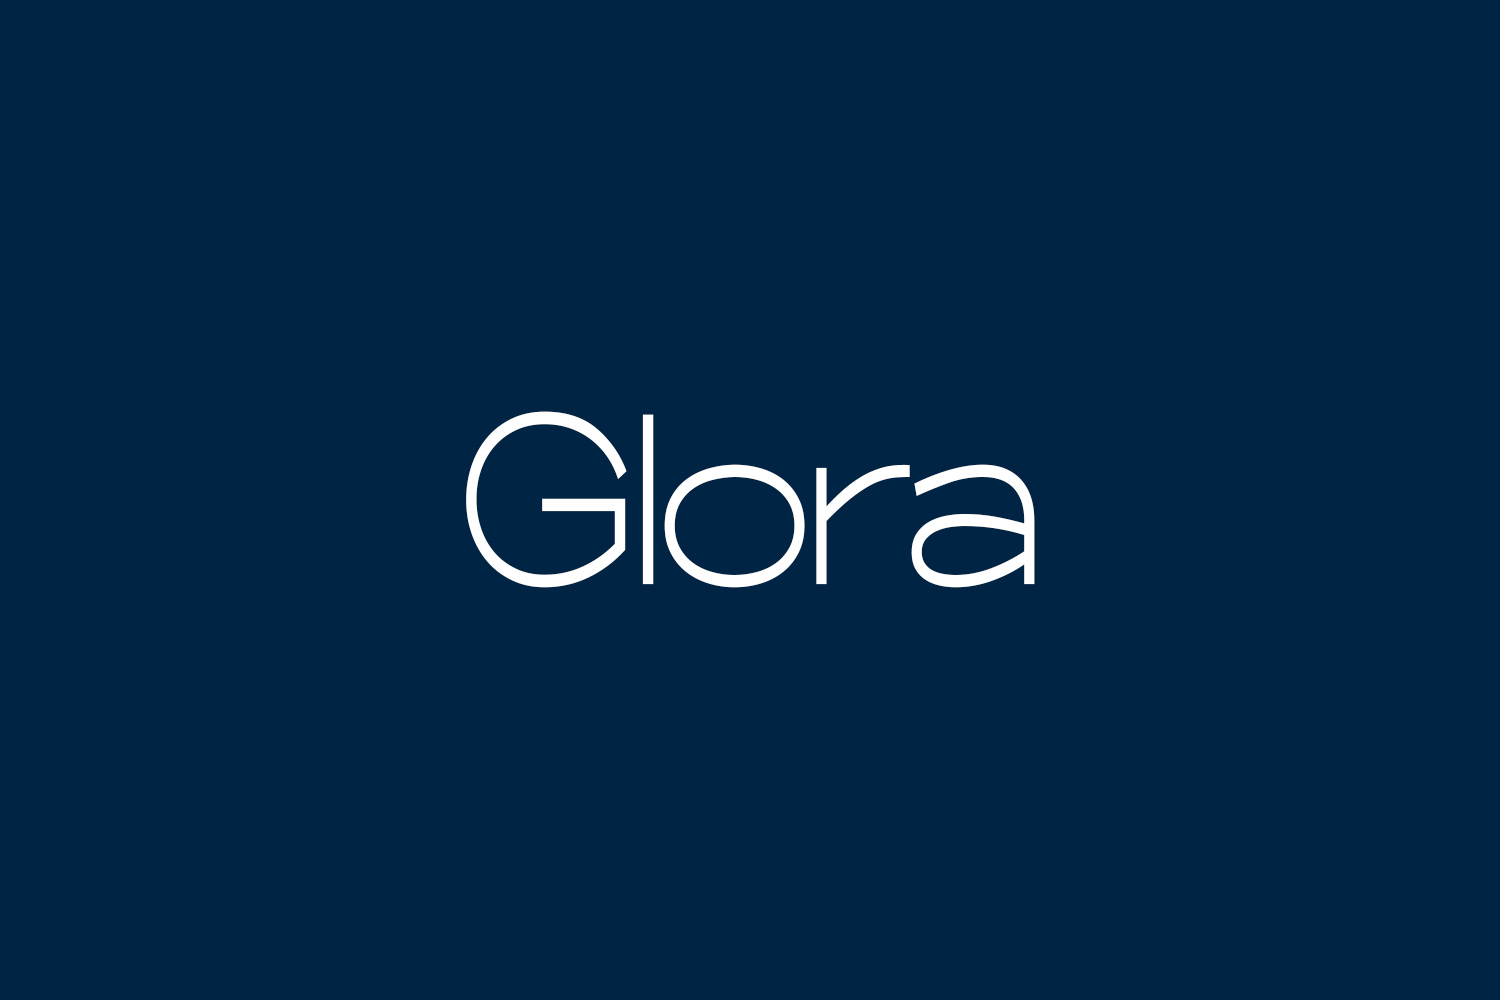 Glora Free Font